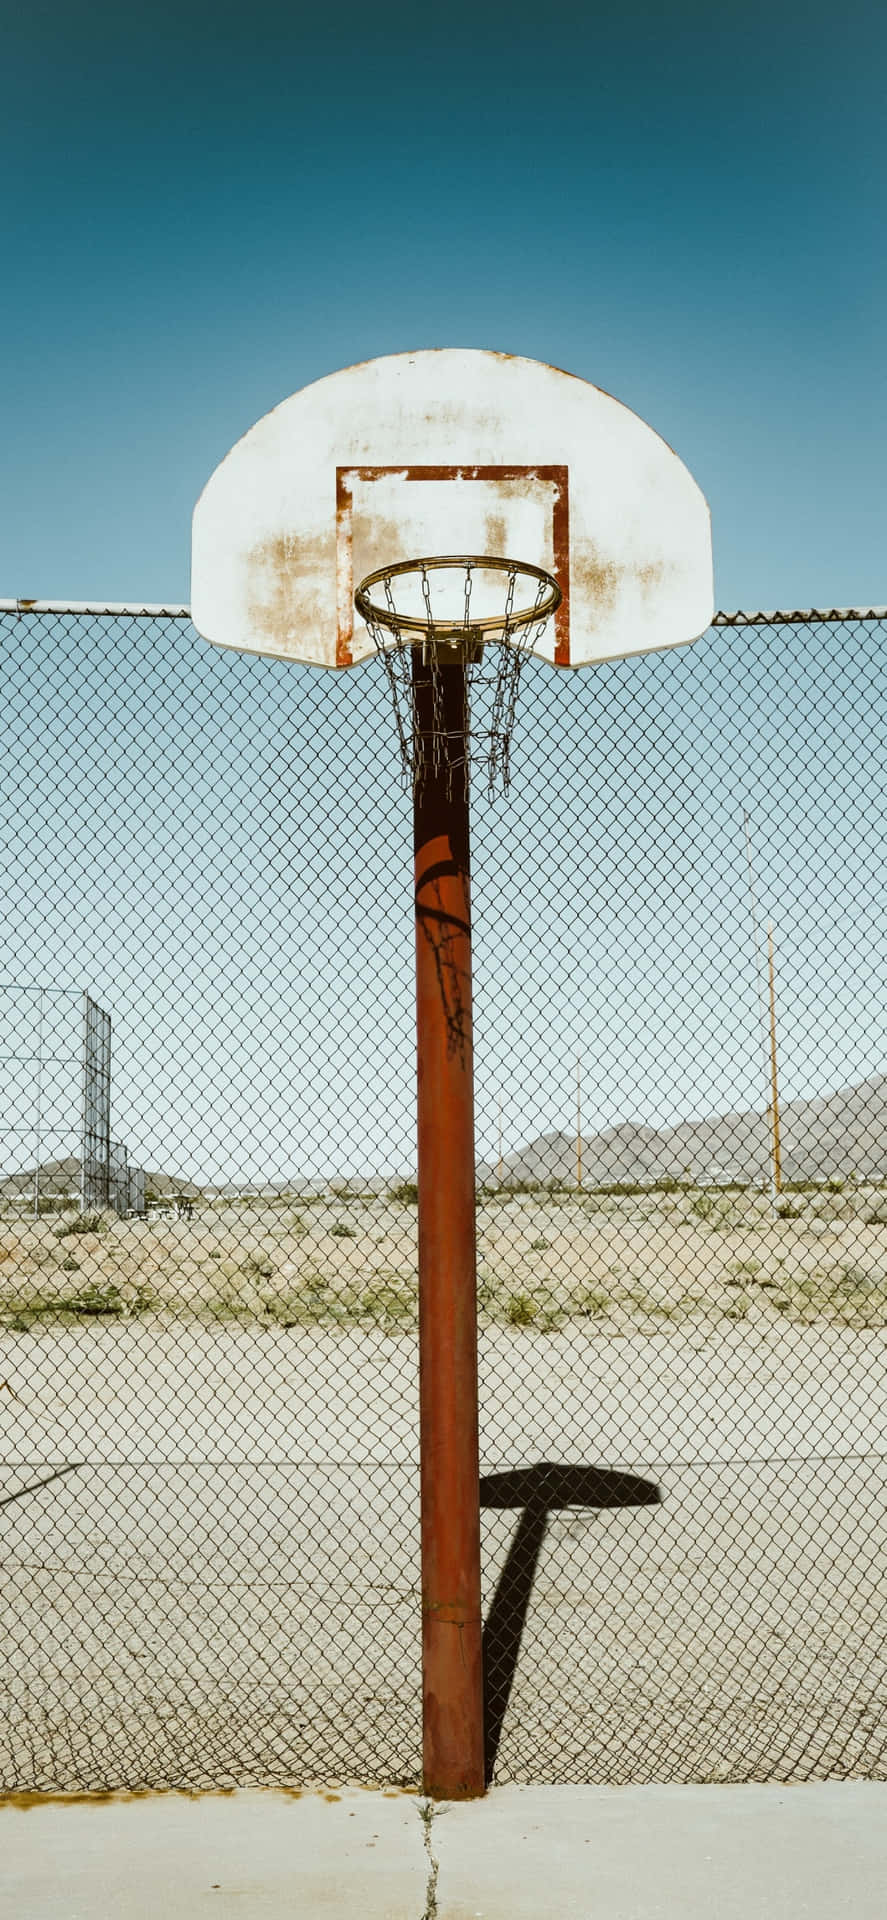 Iphonexs Basketball Altes Spielfeld Hintergrundbild